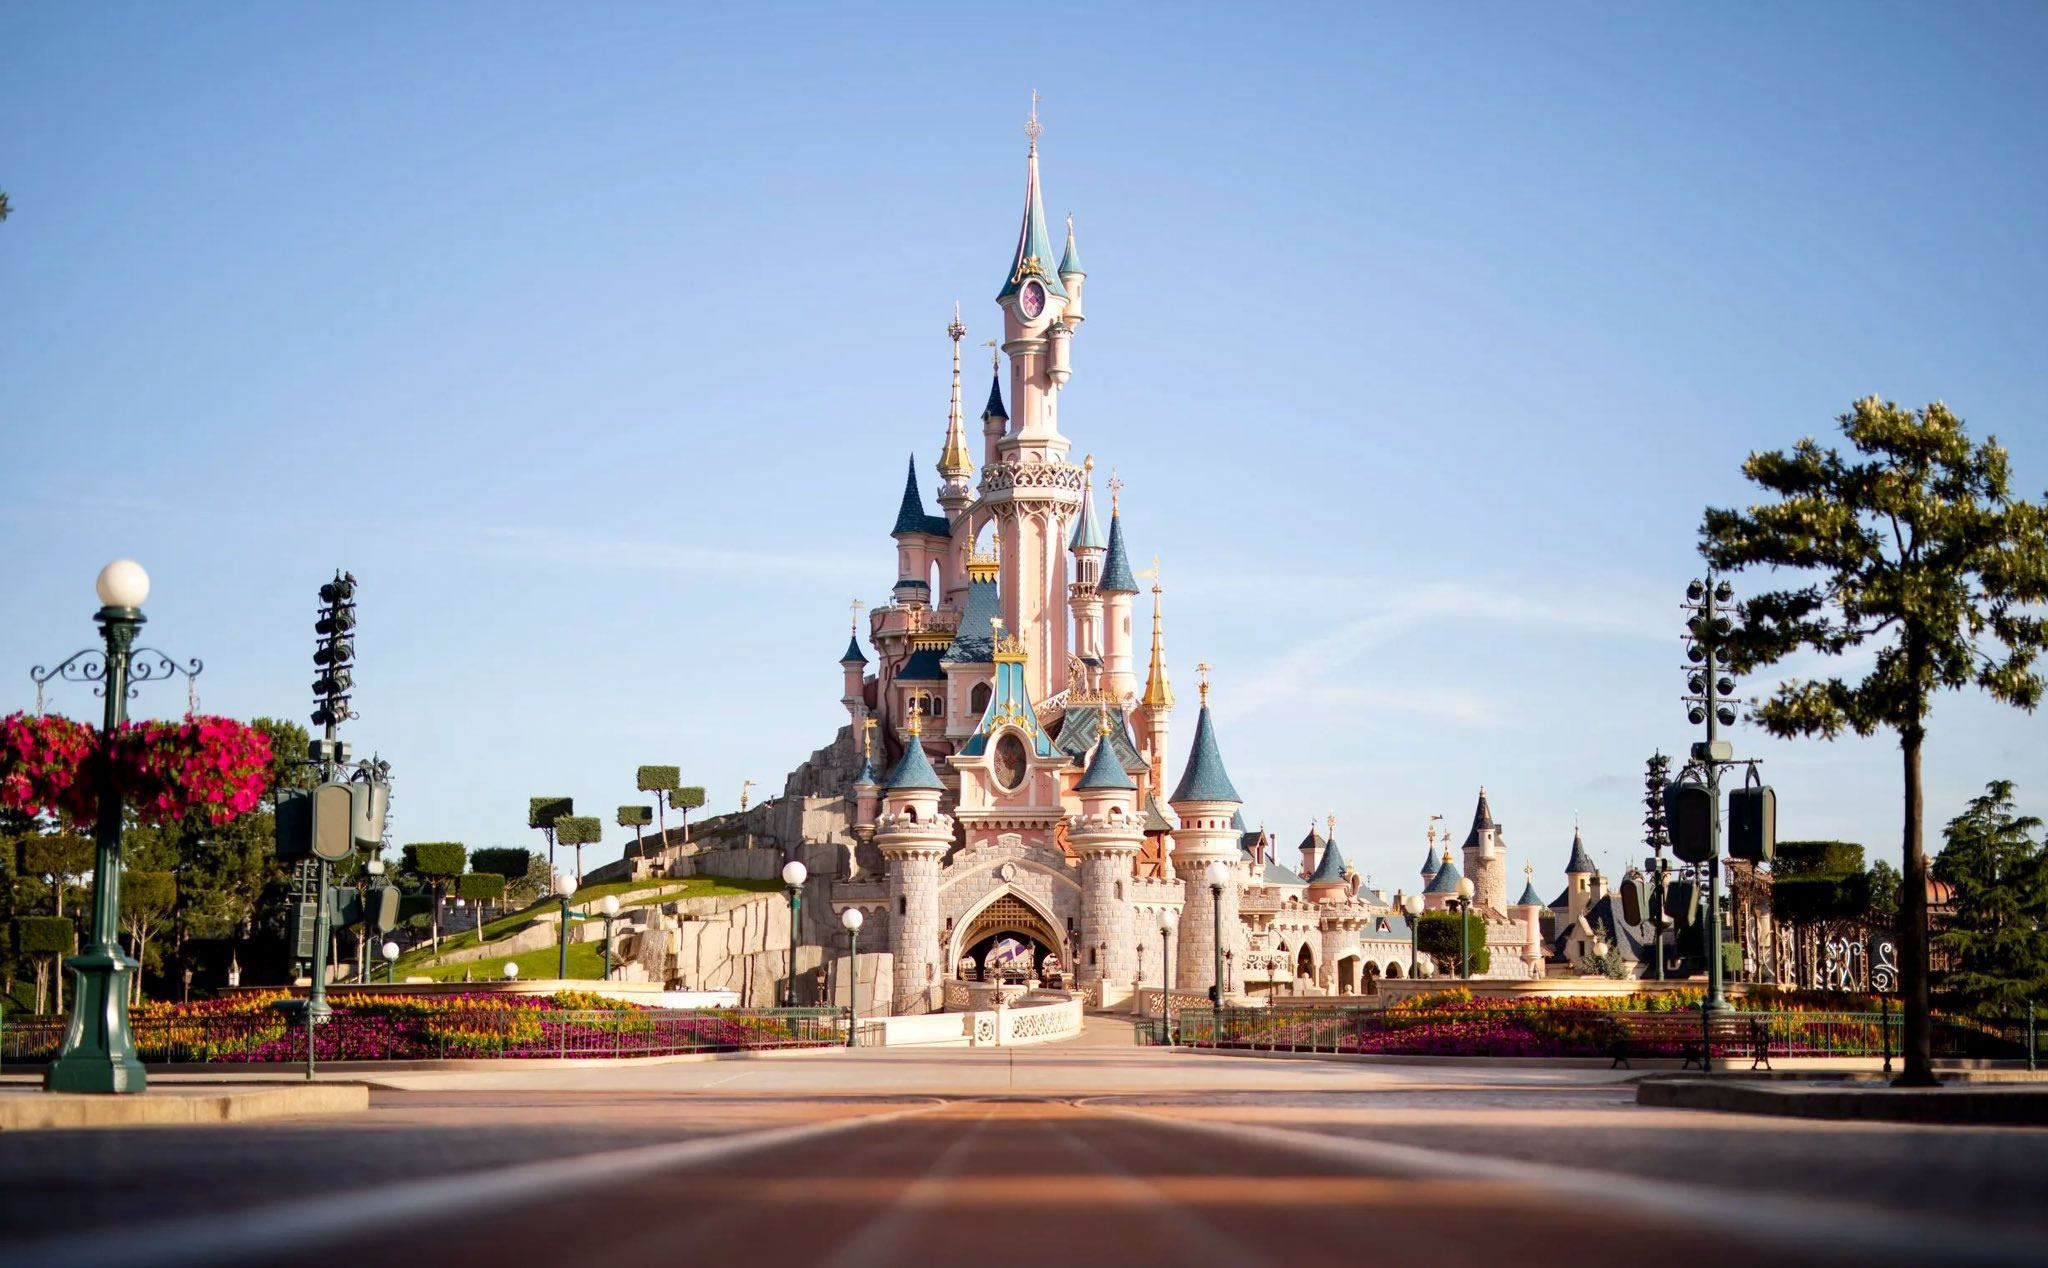 How to get to Disneyland Paris: Disneyland Paris Effortless Travel Guide